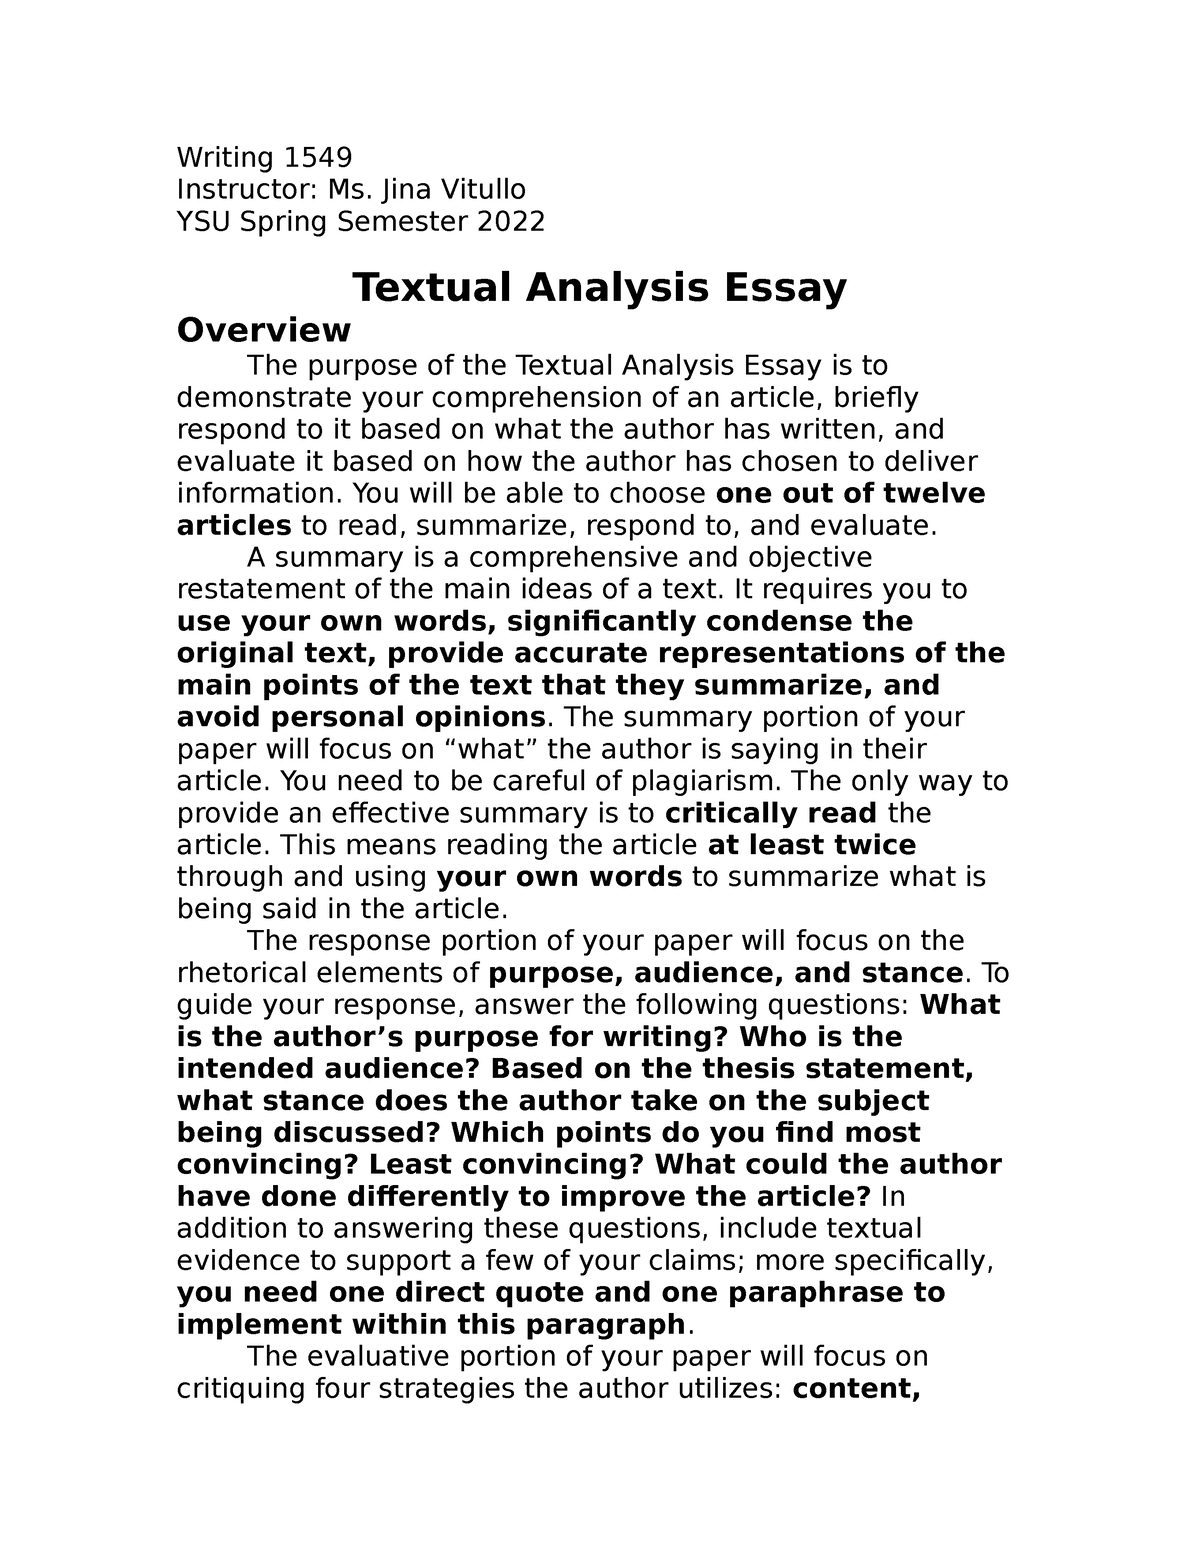 textual analysis essay format